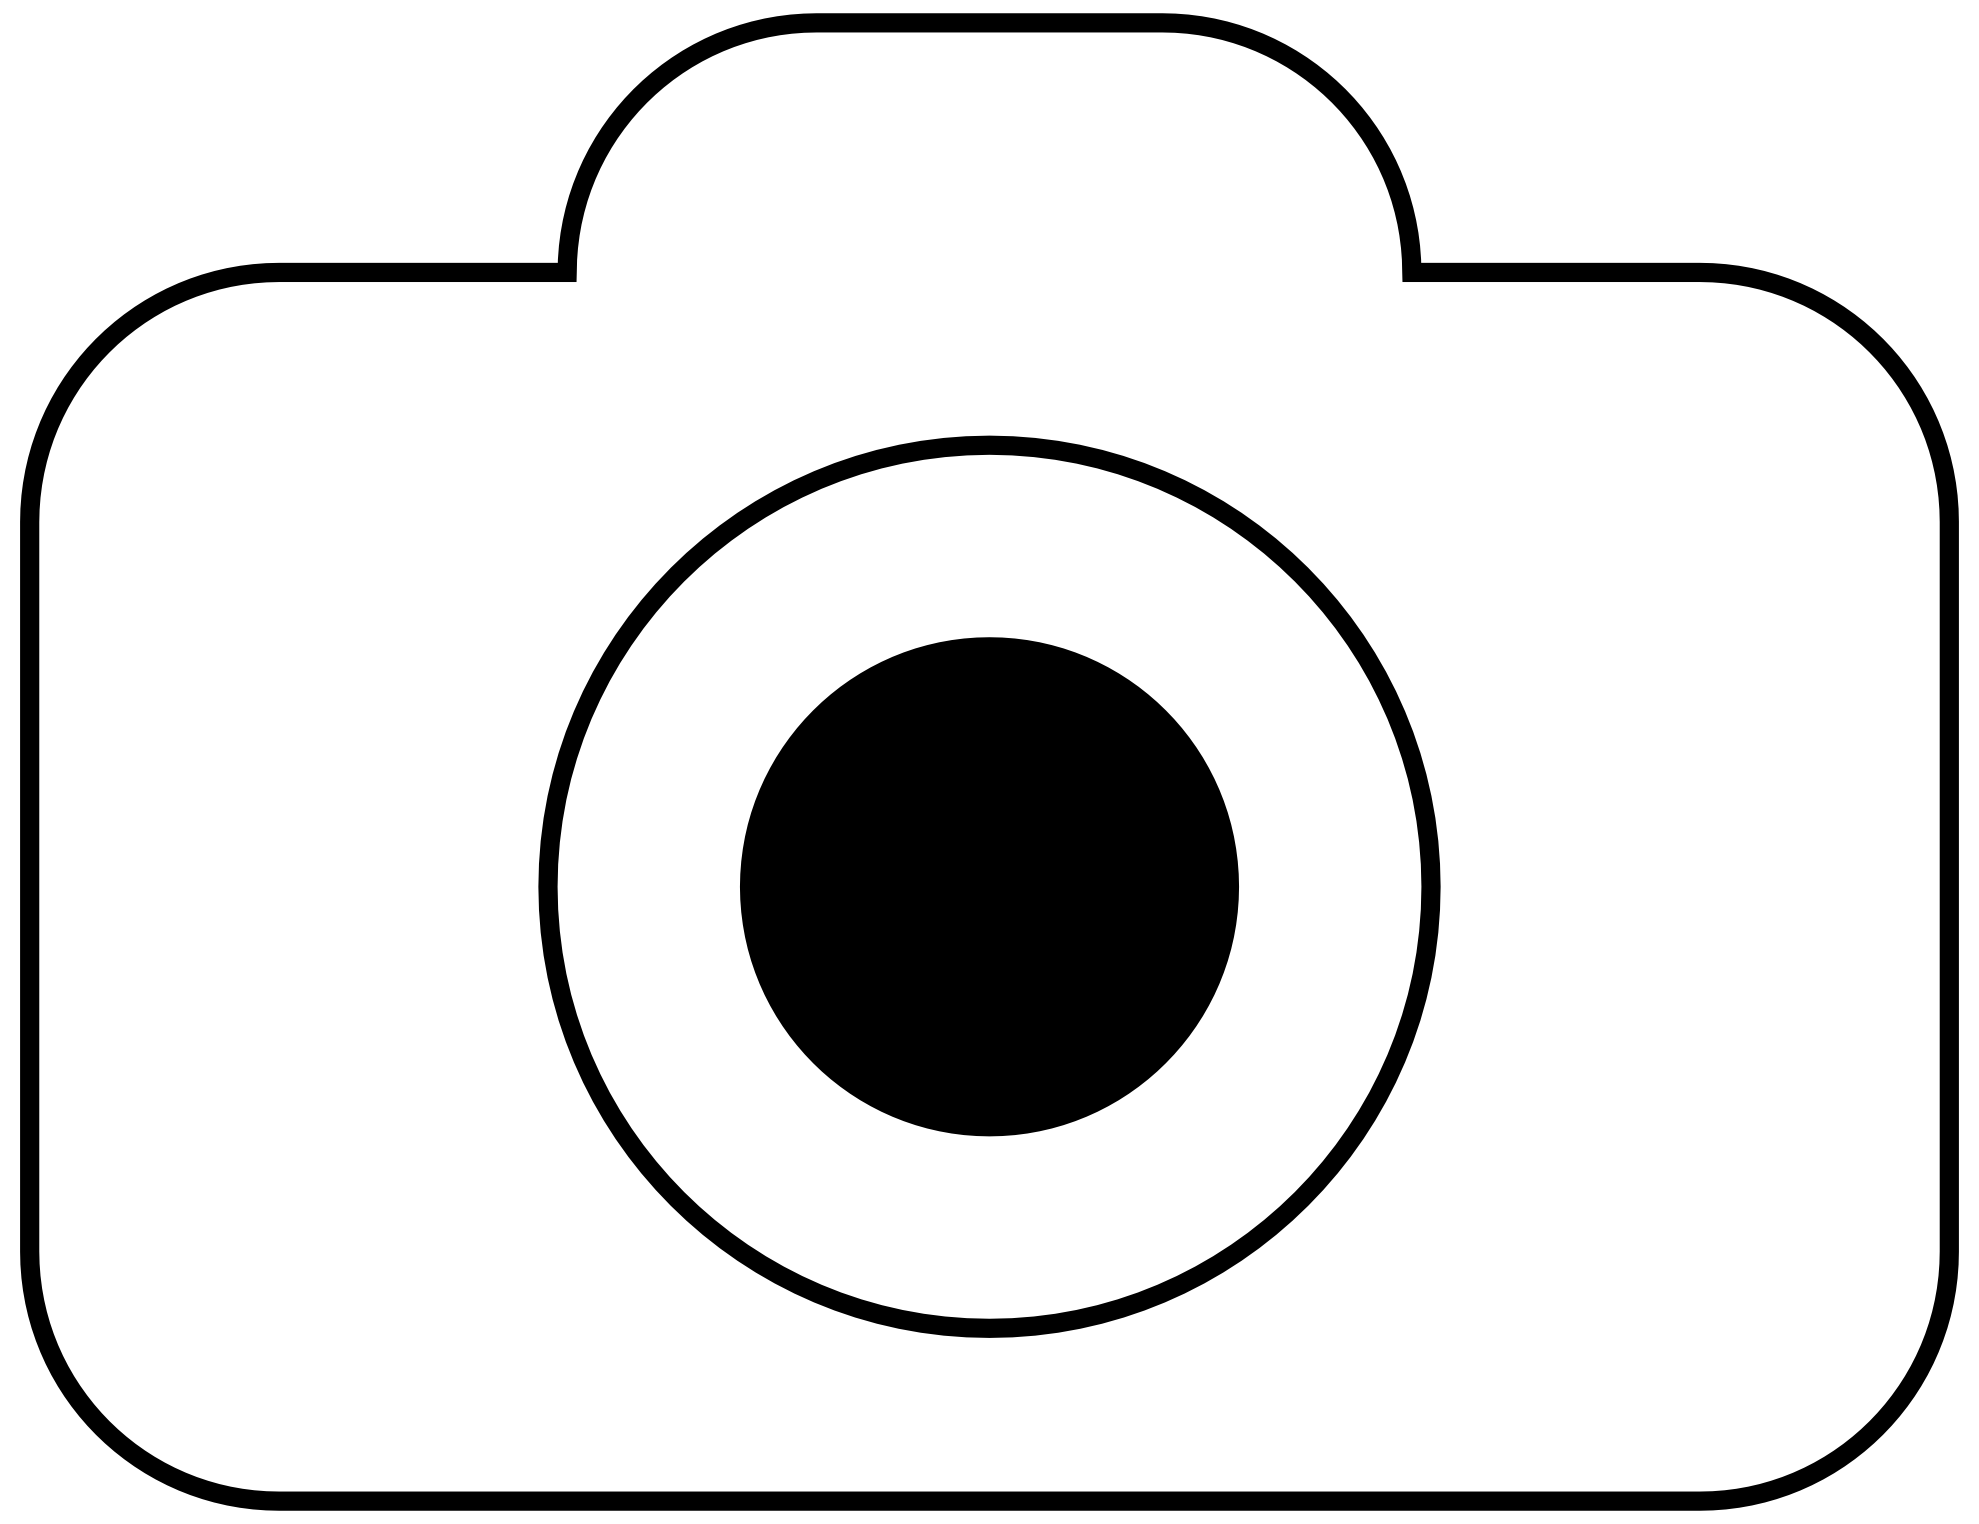 Digerati Logo photo - 1